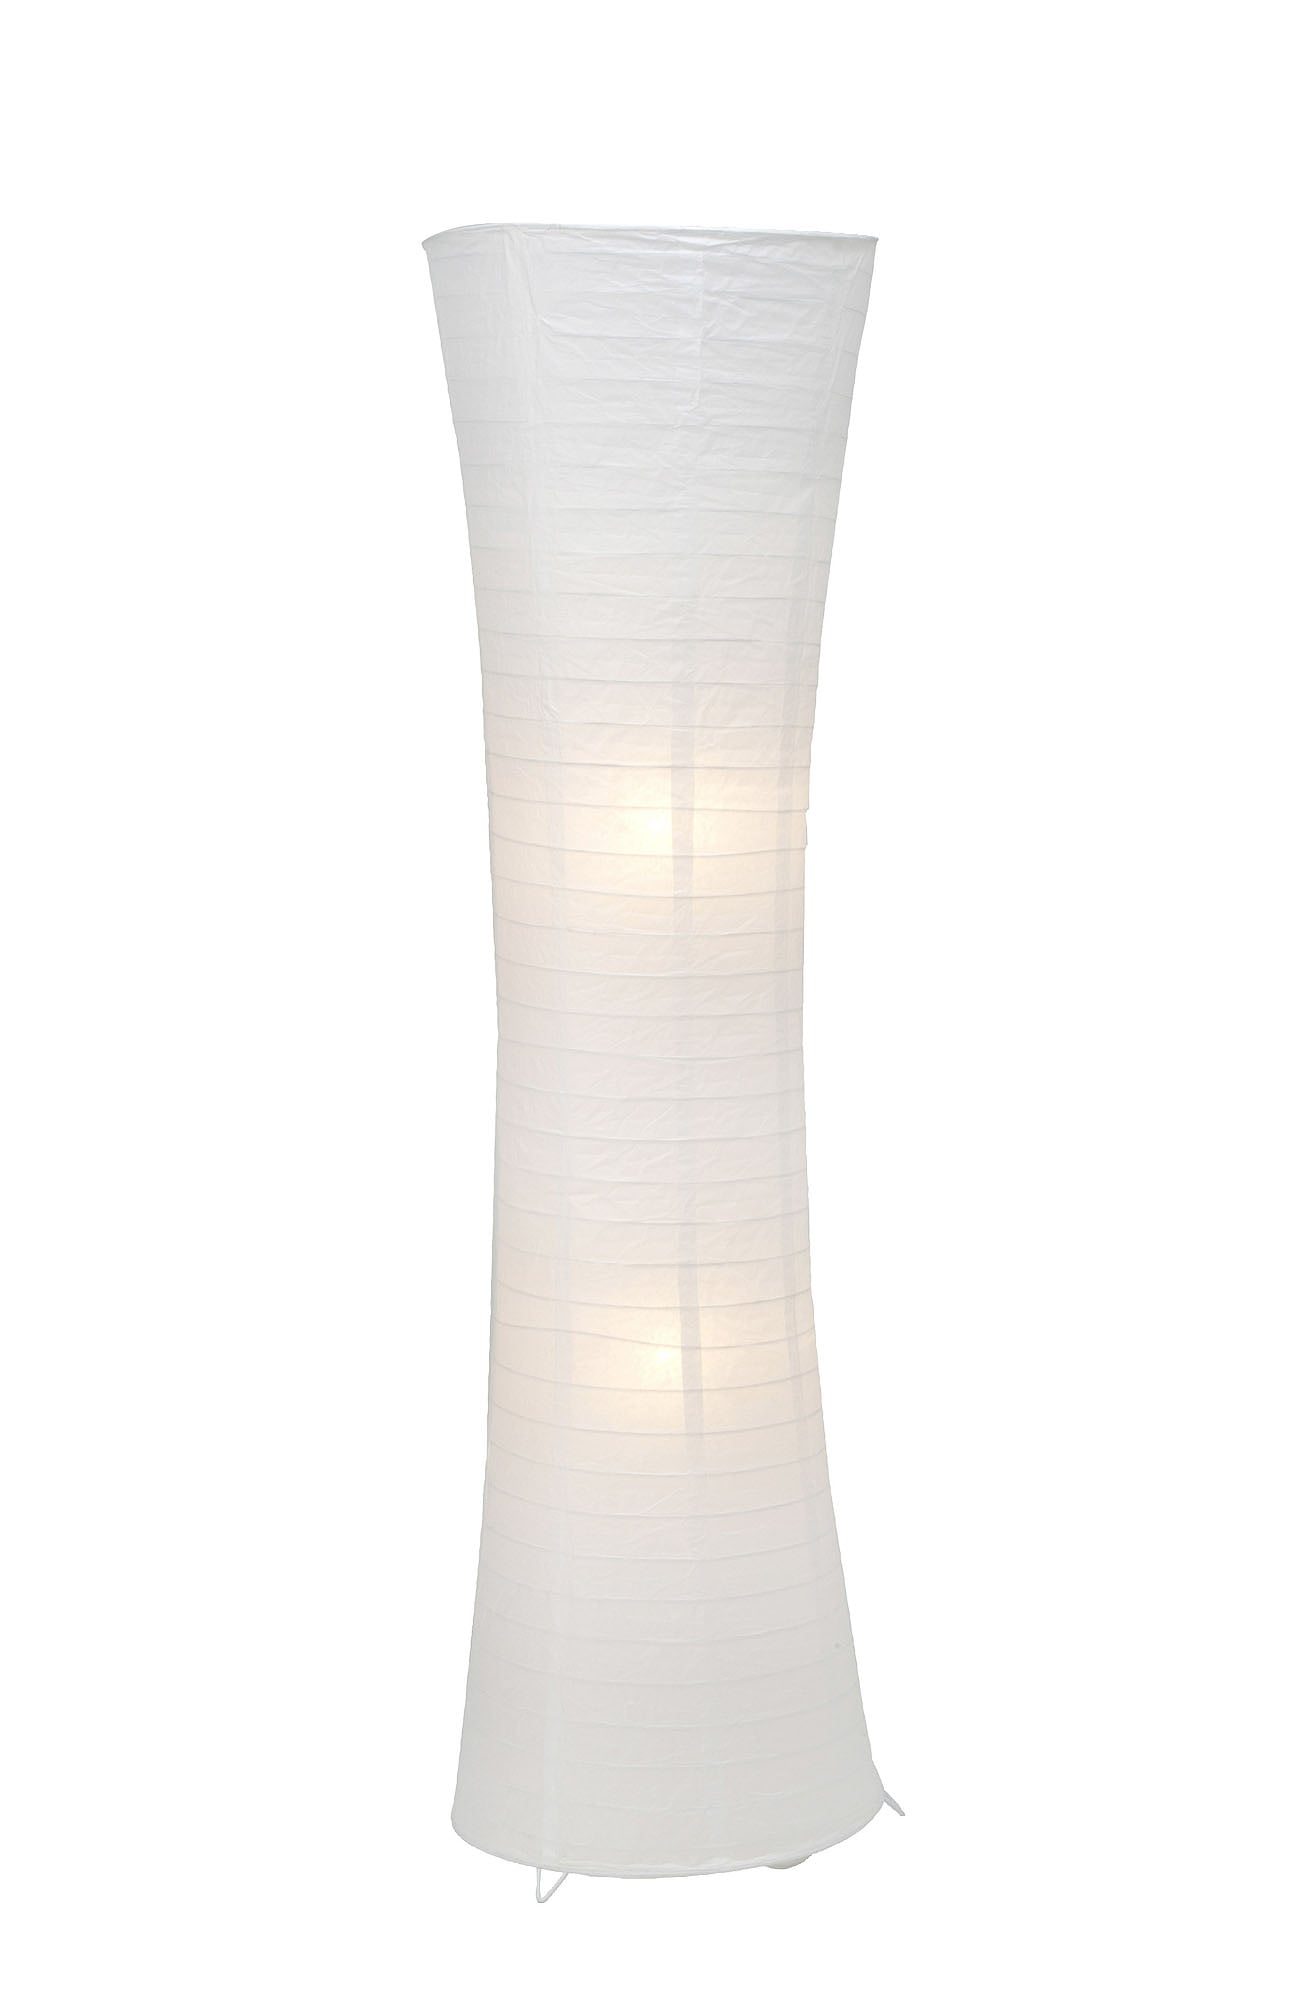 Brilliant Stehlampe »Becca«, 2 flammig-flammig, 125 cm Höhe, 35 cm Breite, 2 x E27, Metall/Papier, weiss